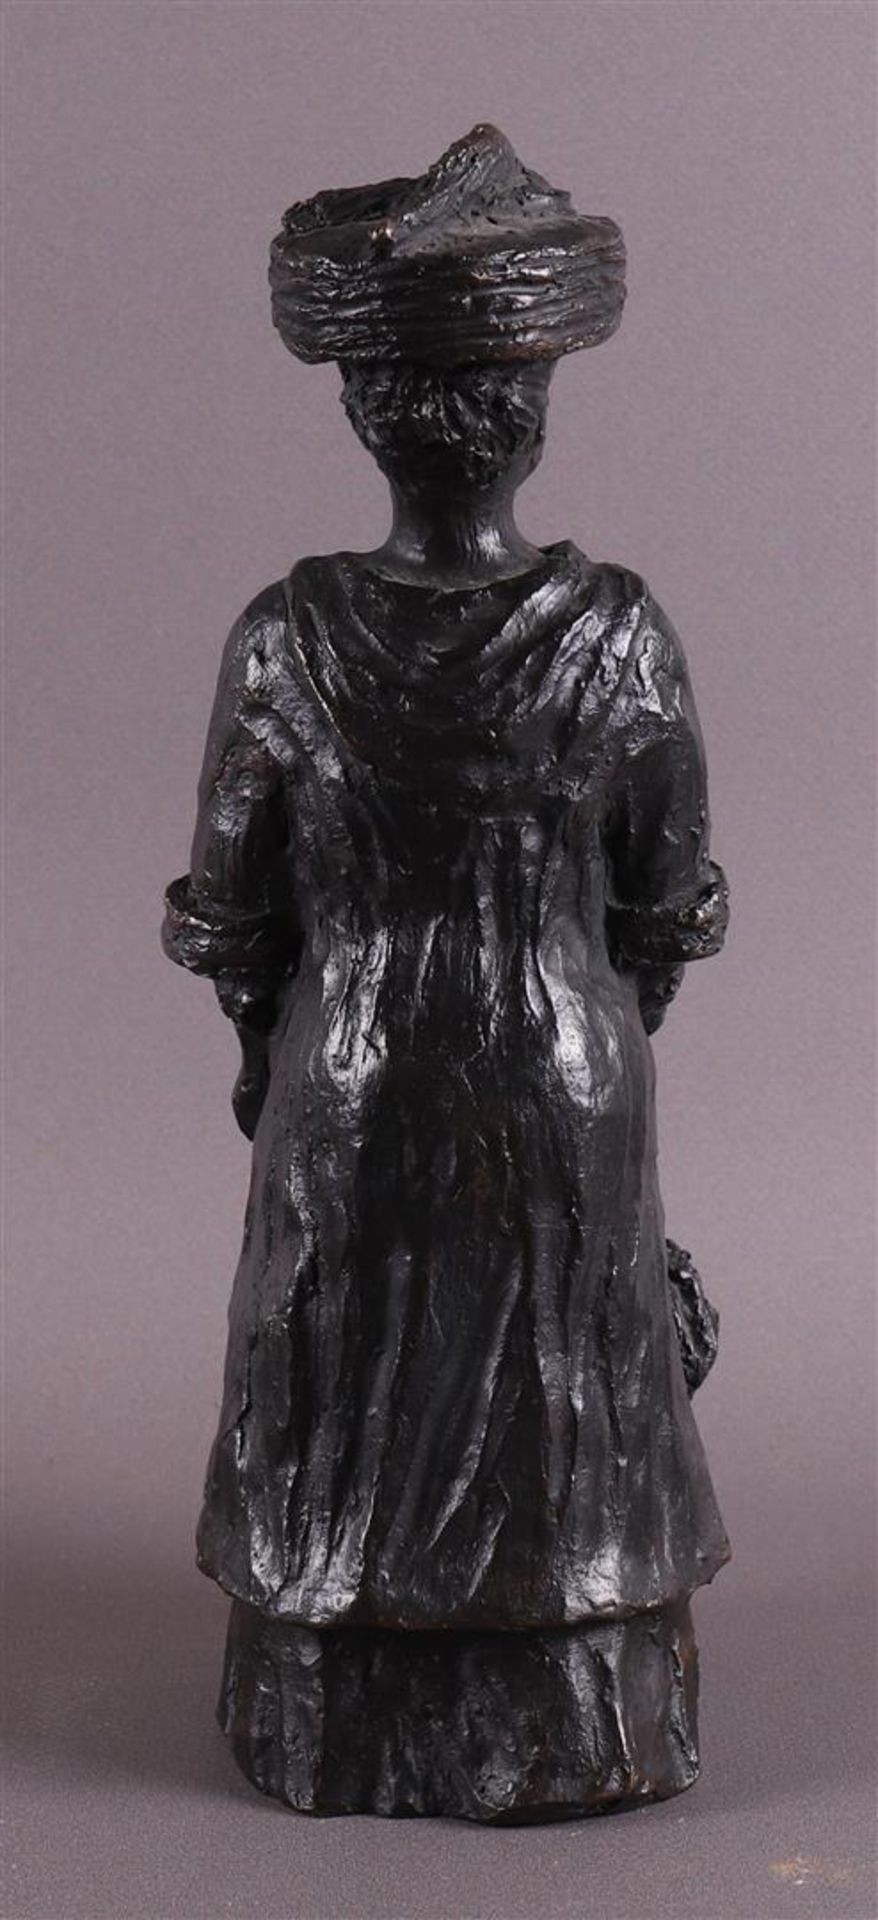 Jaspers - Grottendieck, Greet (1943) 'Wilhelmina', bronze sculpture. - Image 3 of 5